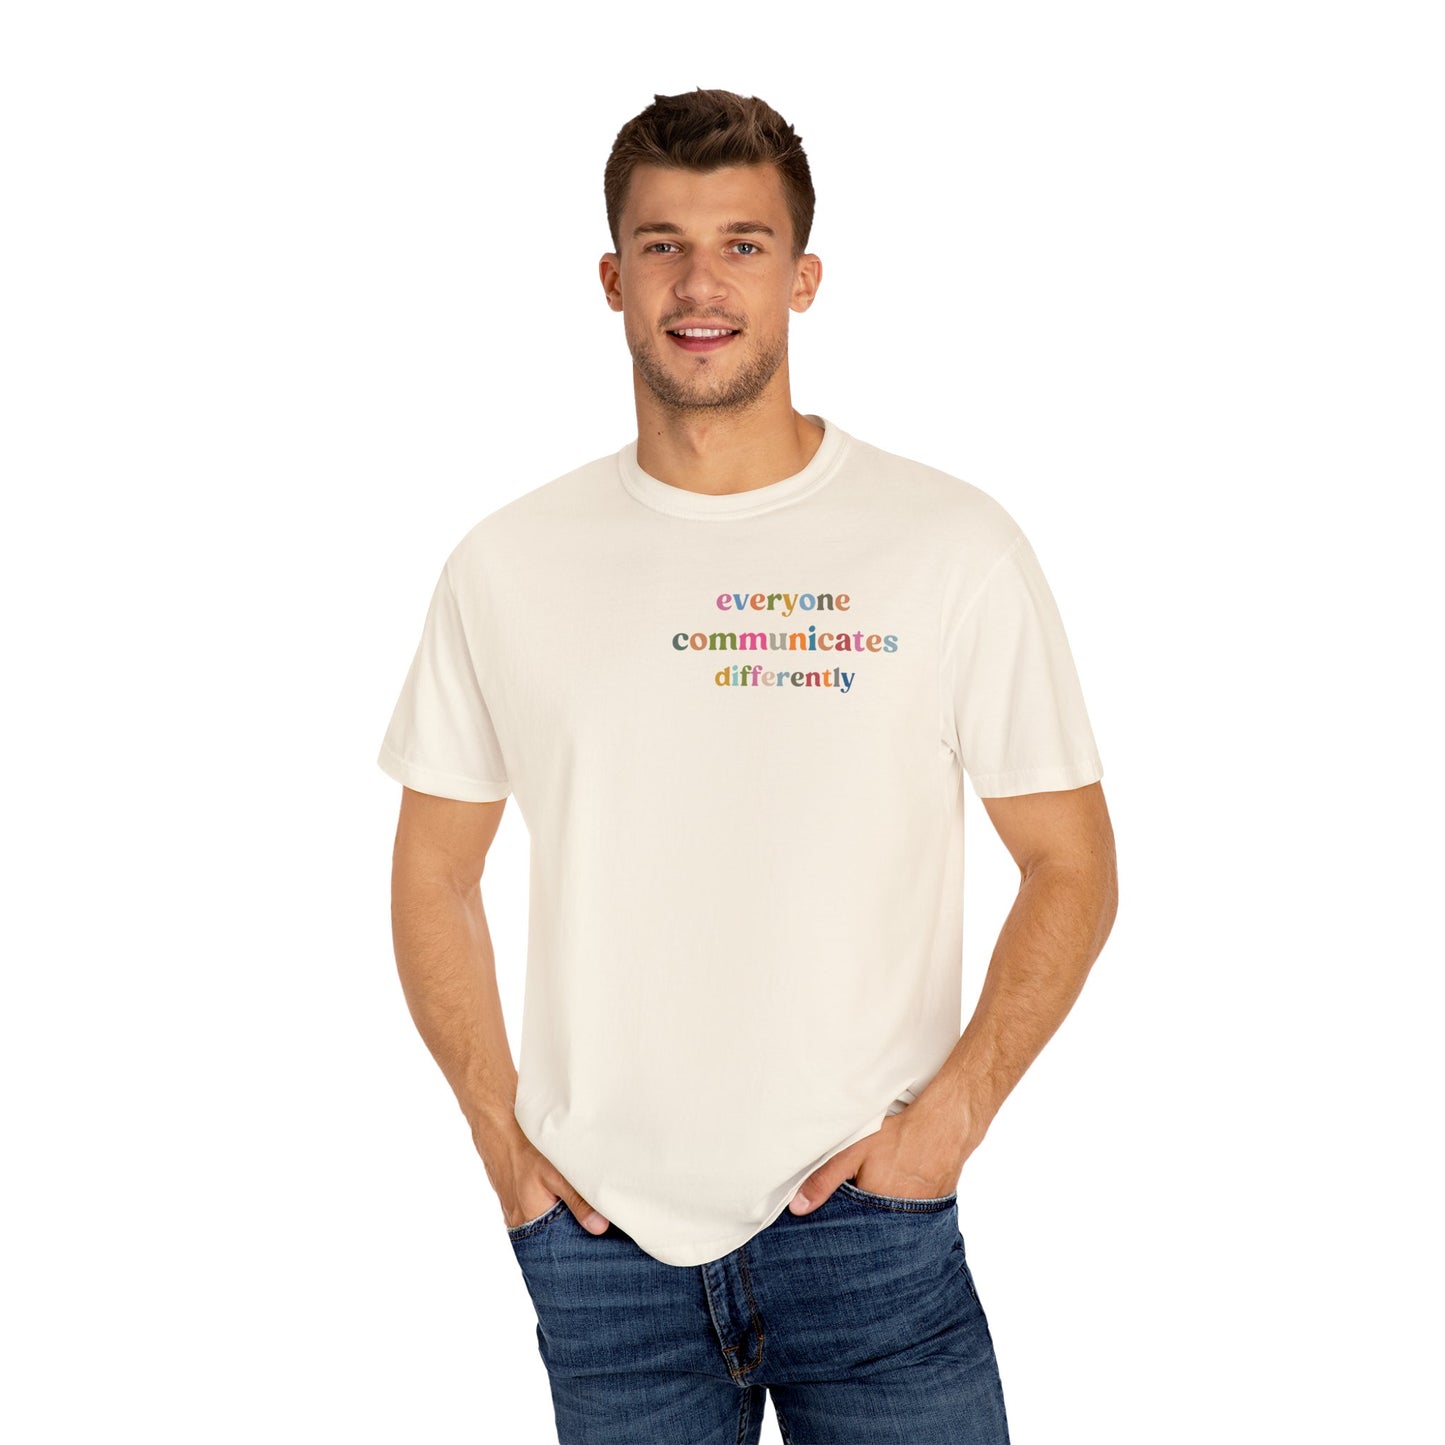 Everyone Communicates Differently Shirt, Special Education Teacher Shirt Inclusive Shirt, Autism Awareness Shirt, ADHD Shirt, CC809